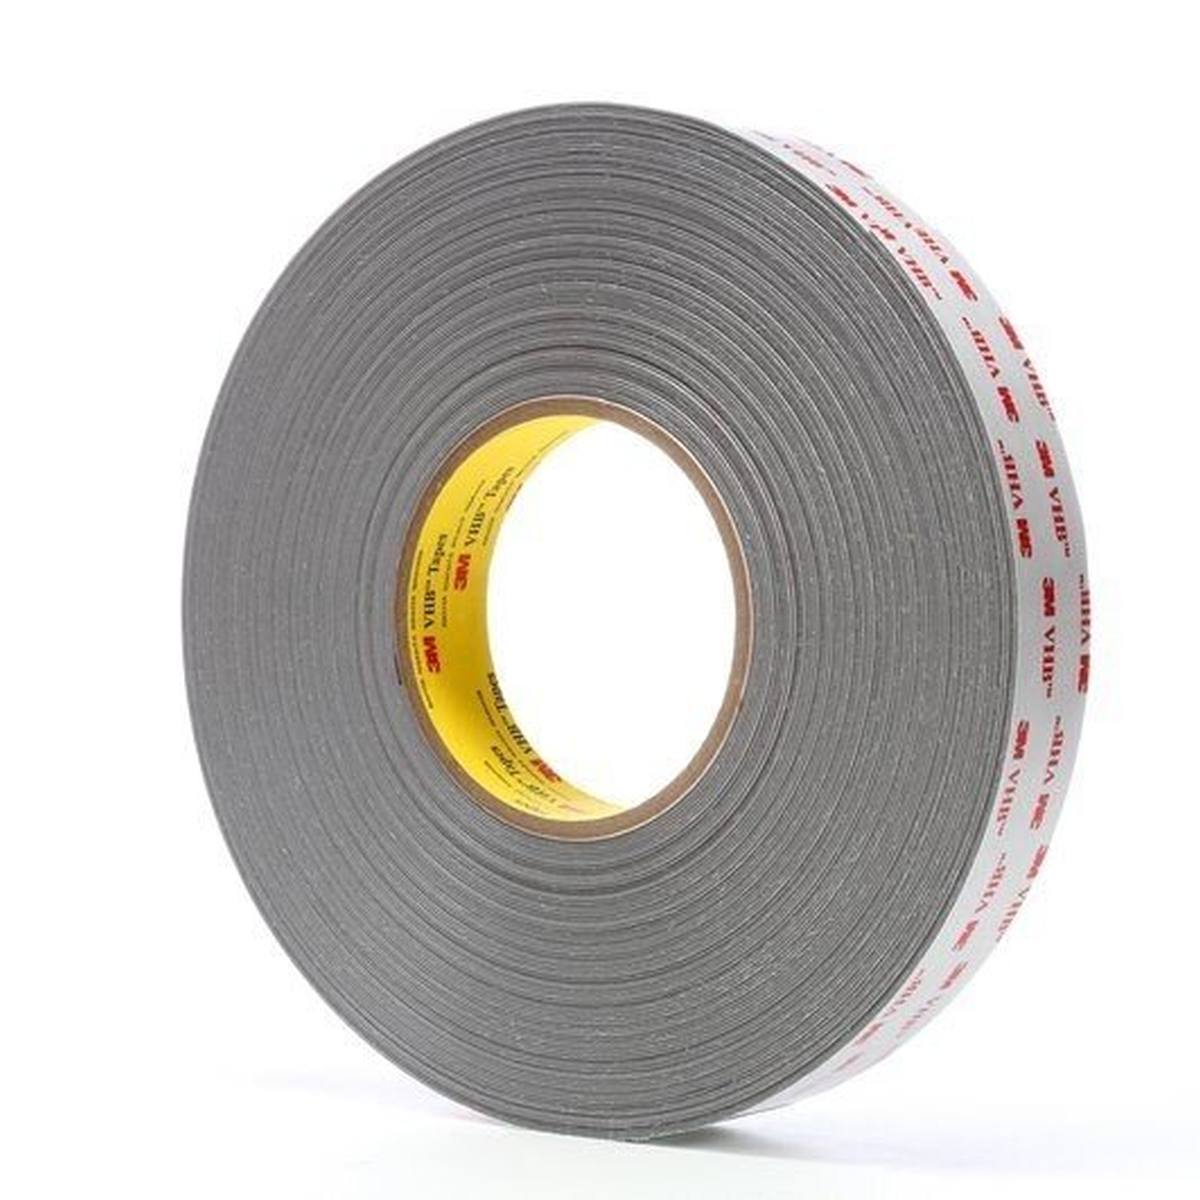 3M VHB Adhesive tape RP 25P, grey, 19 mm x 66 m, 0.6 mm